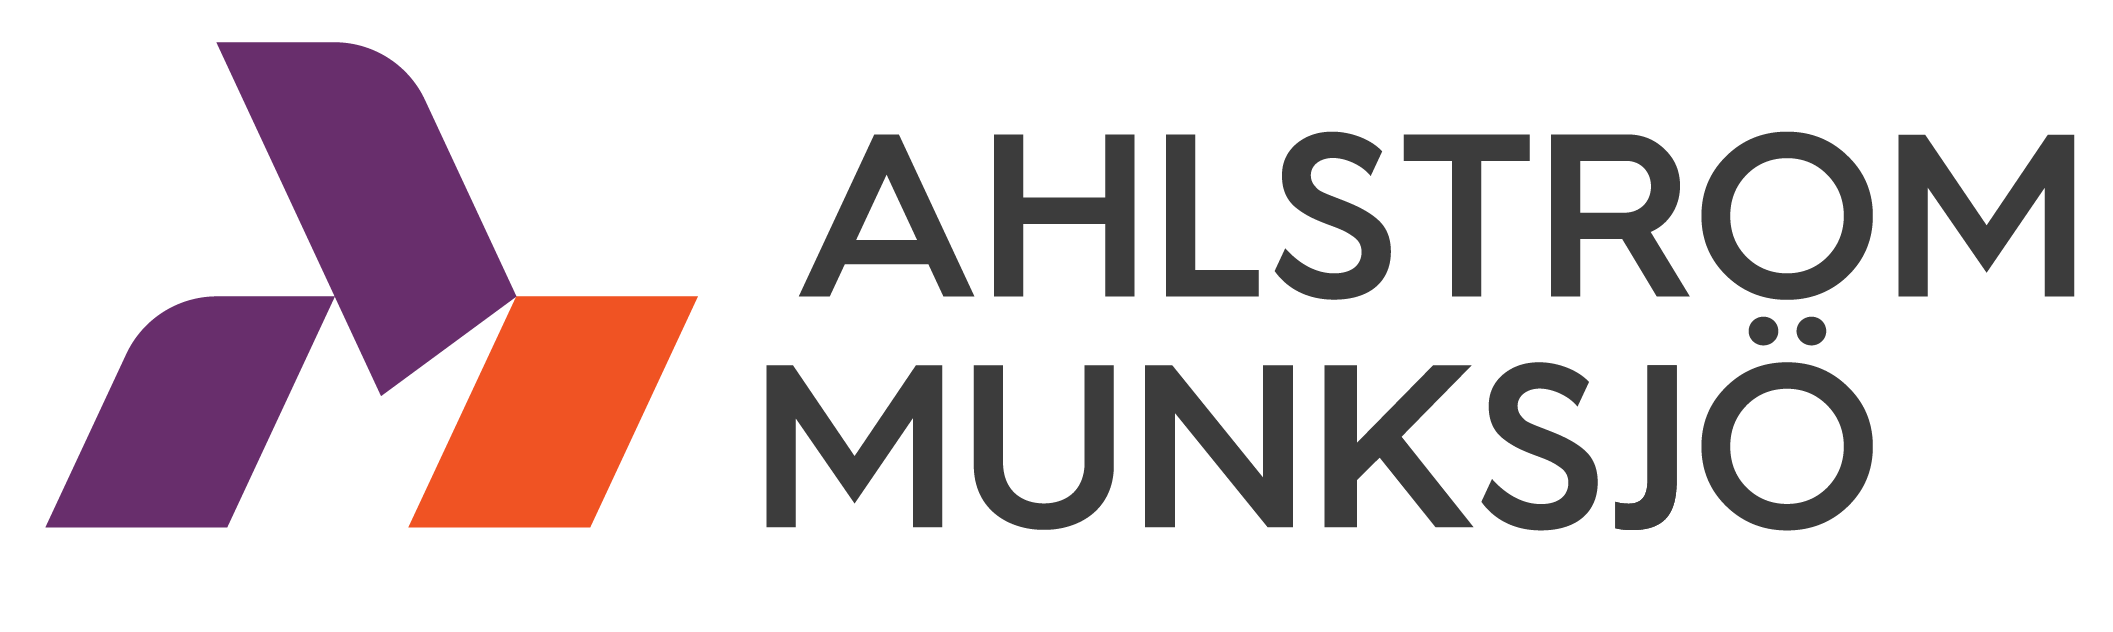 Ahlstrom-Munksjo logo